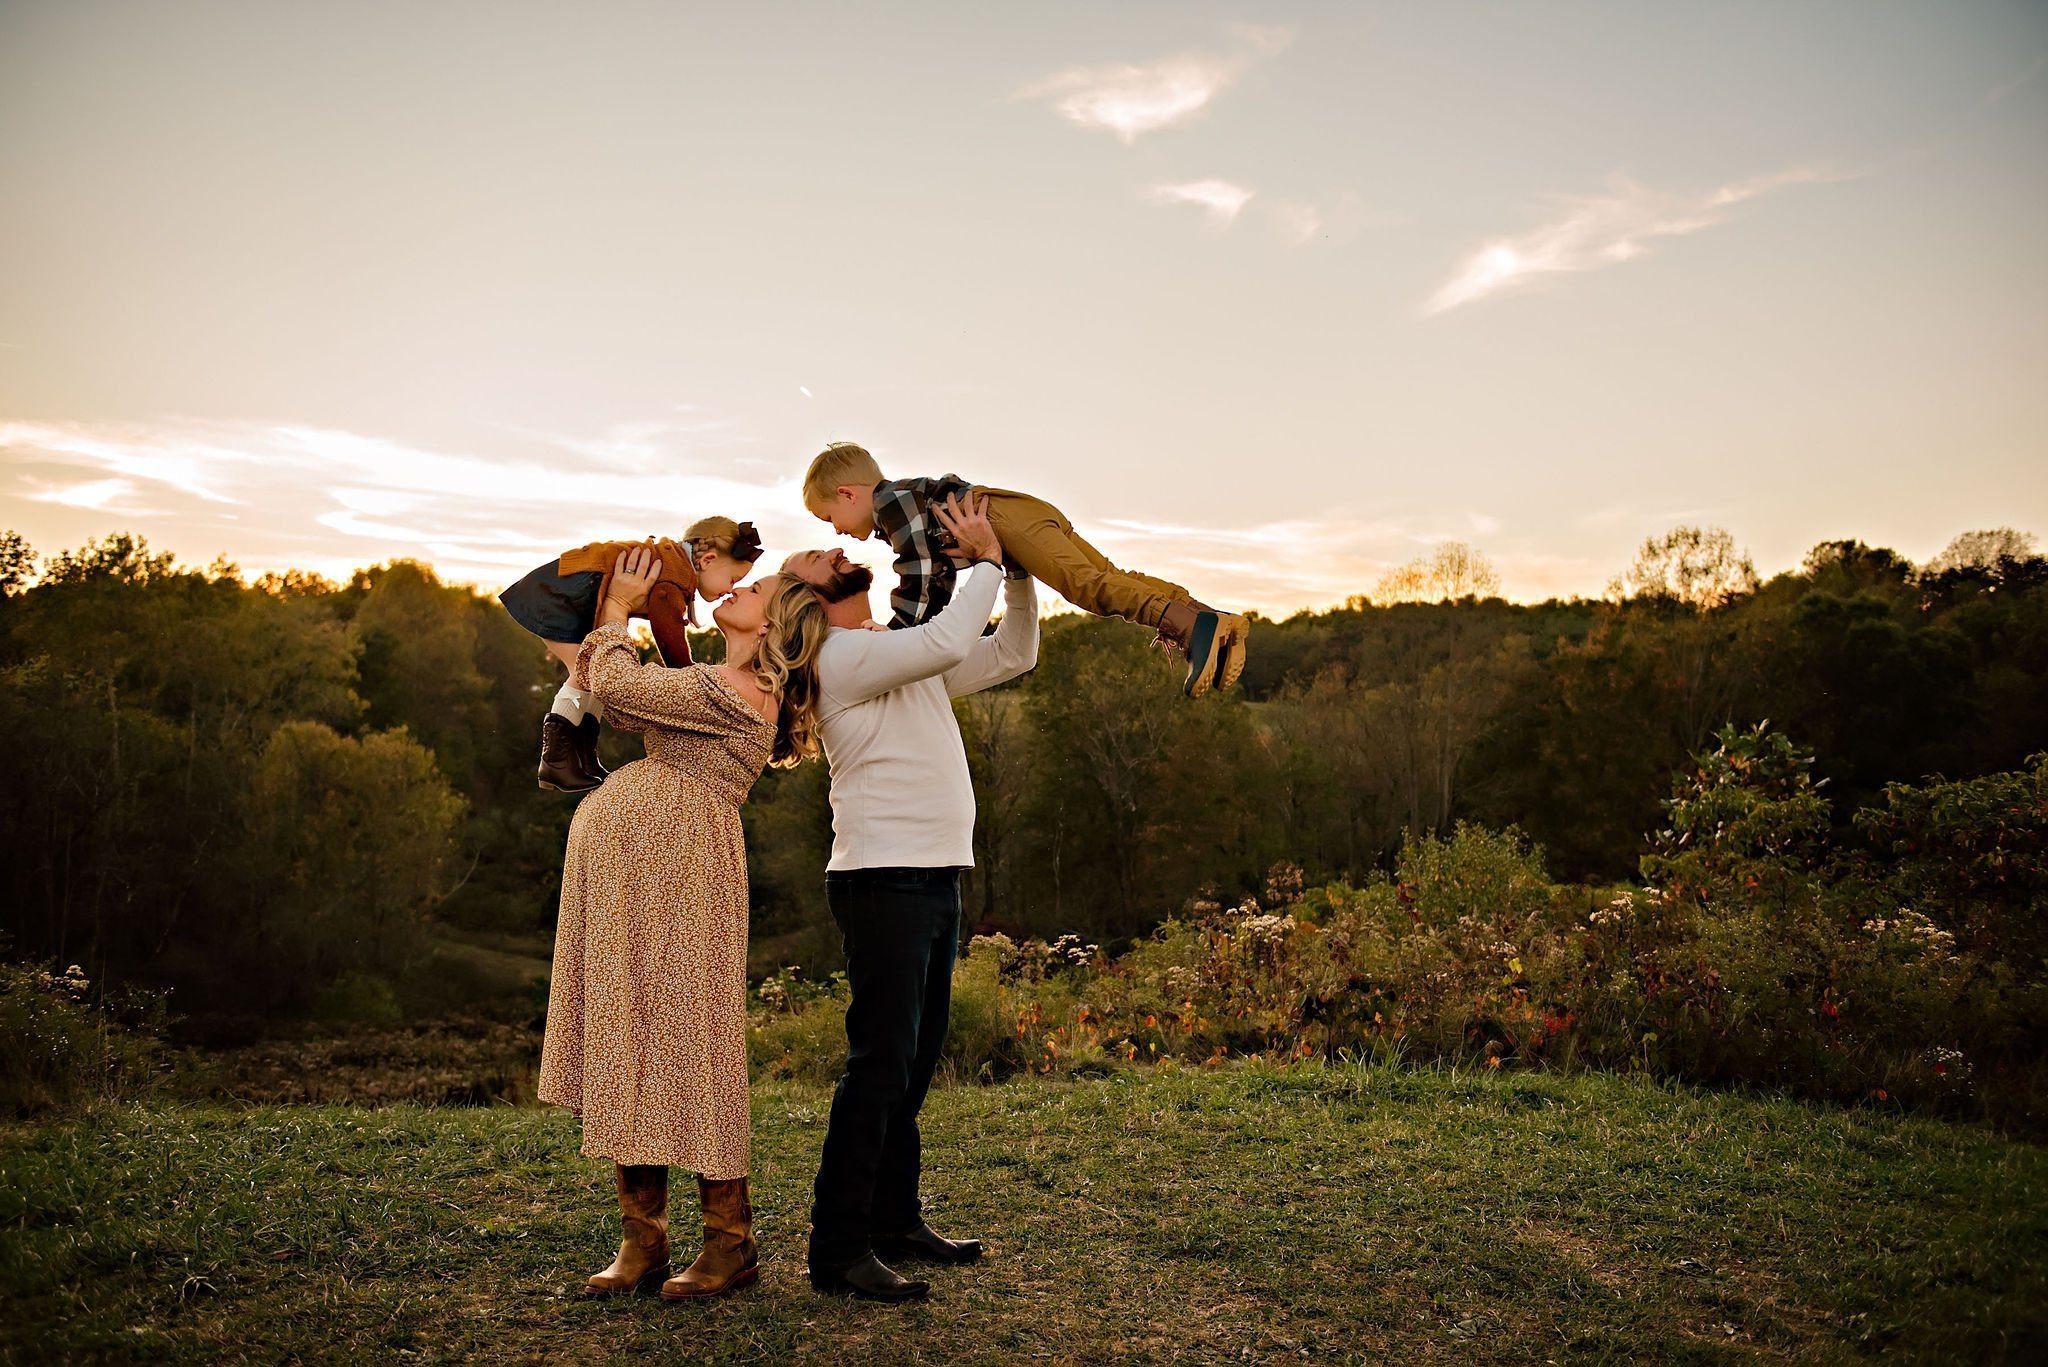 canton-ohio-photographer-family-maternity-outdoor-sunset-lauren-grayson-photography-13.jpeg